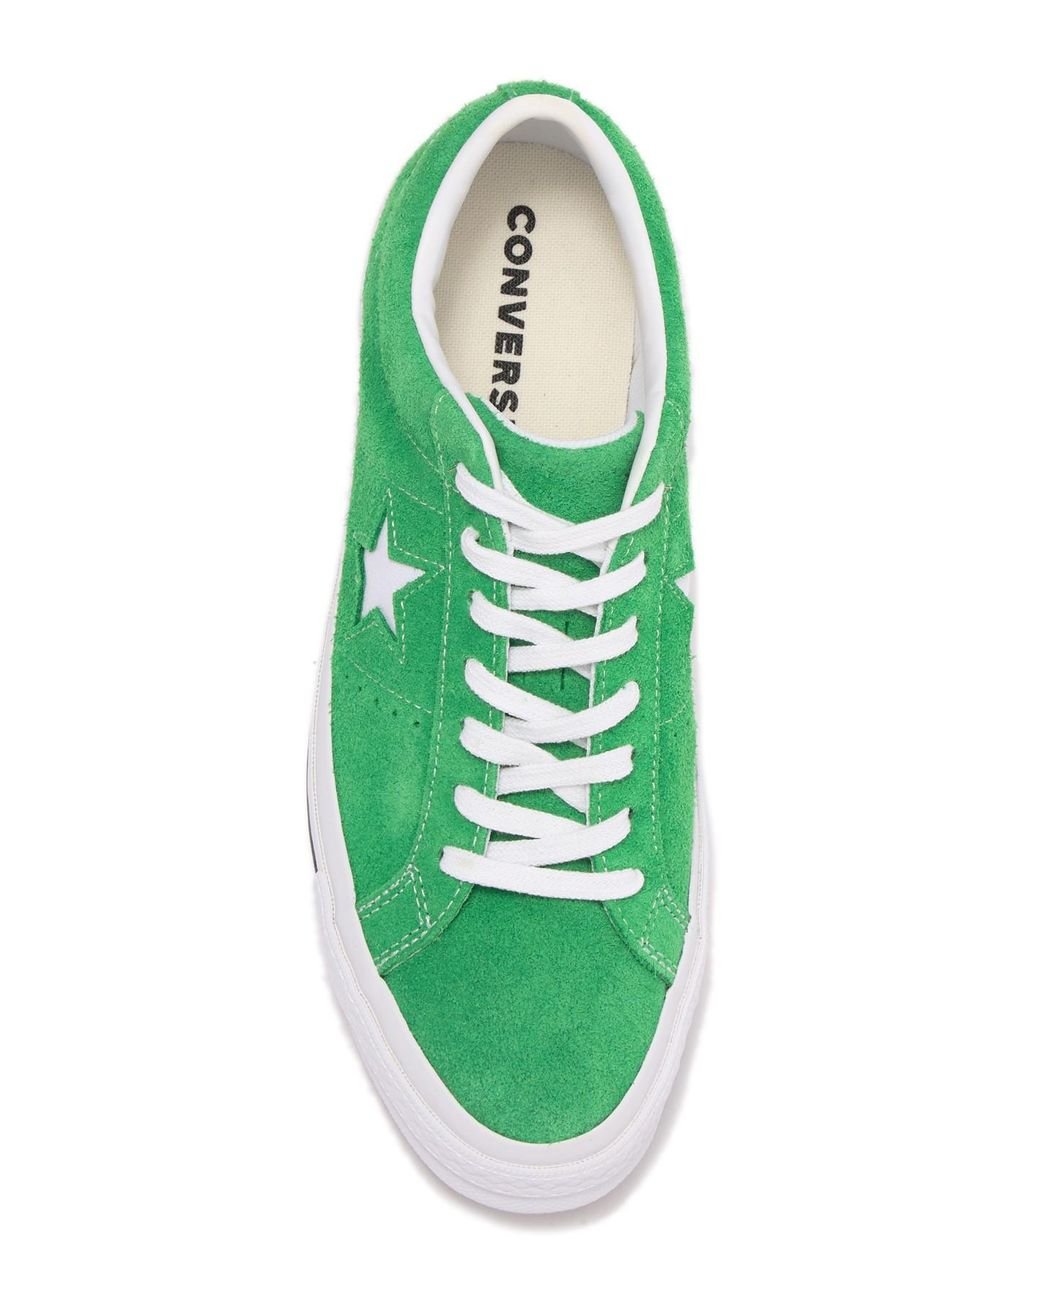 Estrecho de Bering arpón Infectar Converse One Star Oxford Suede Green Star Sneaker (unisex) for Men | Lyst